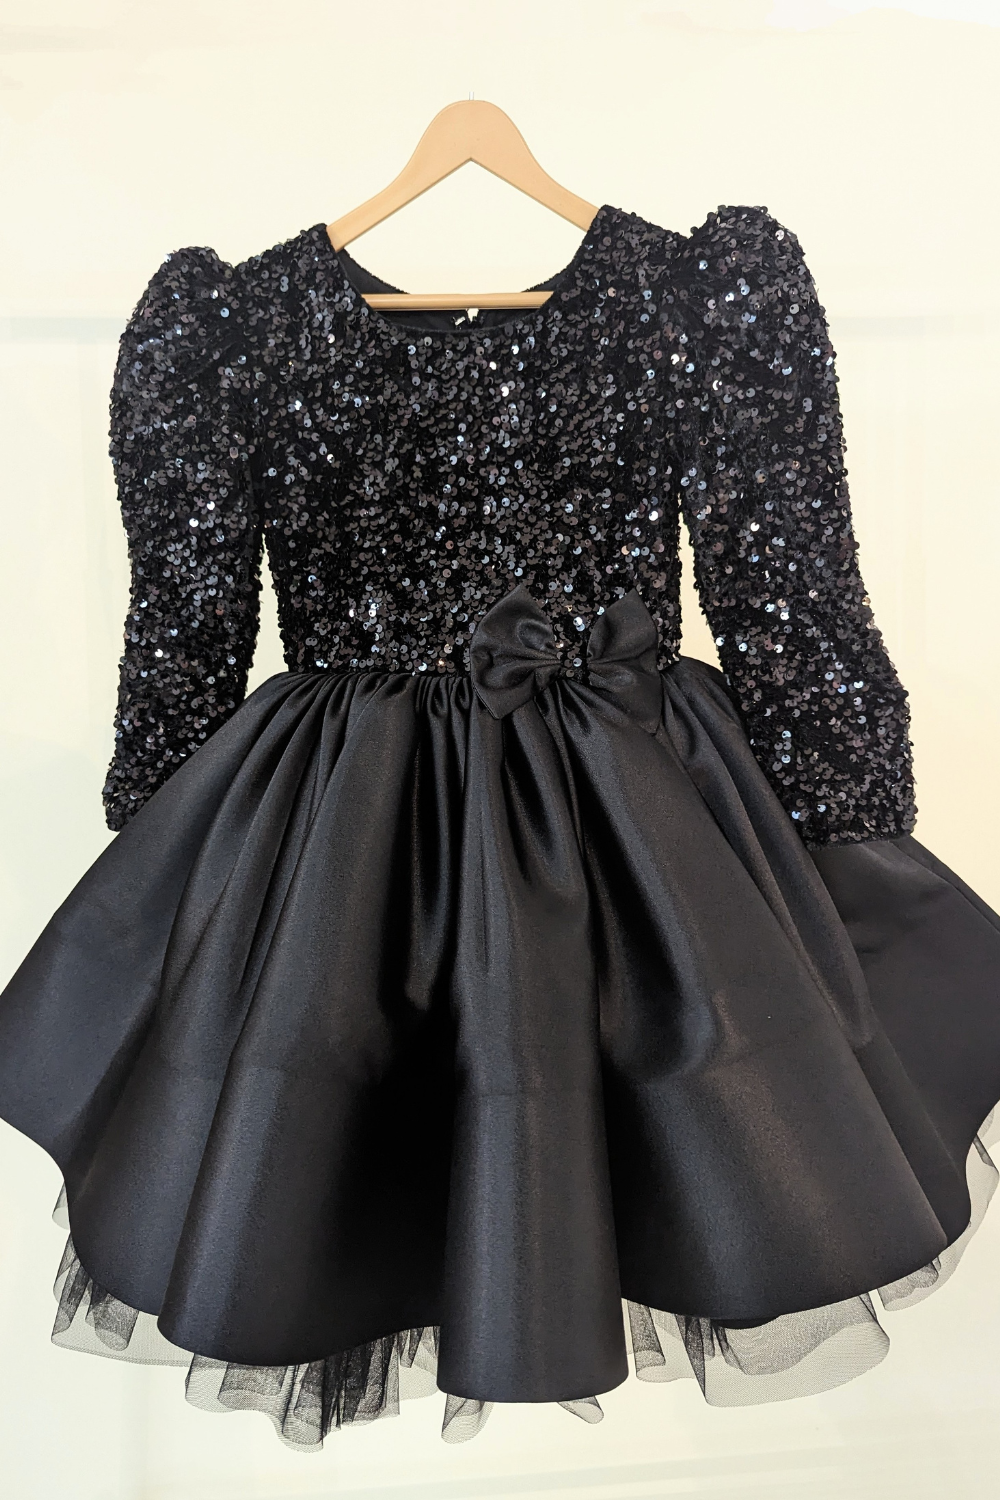 Black sequined dress